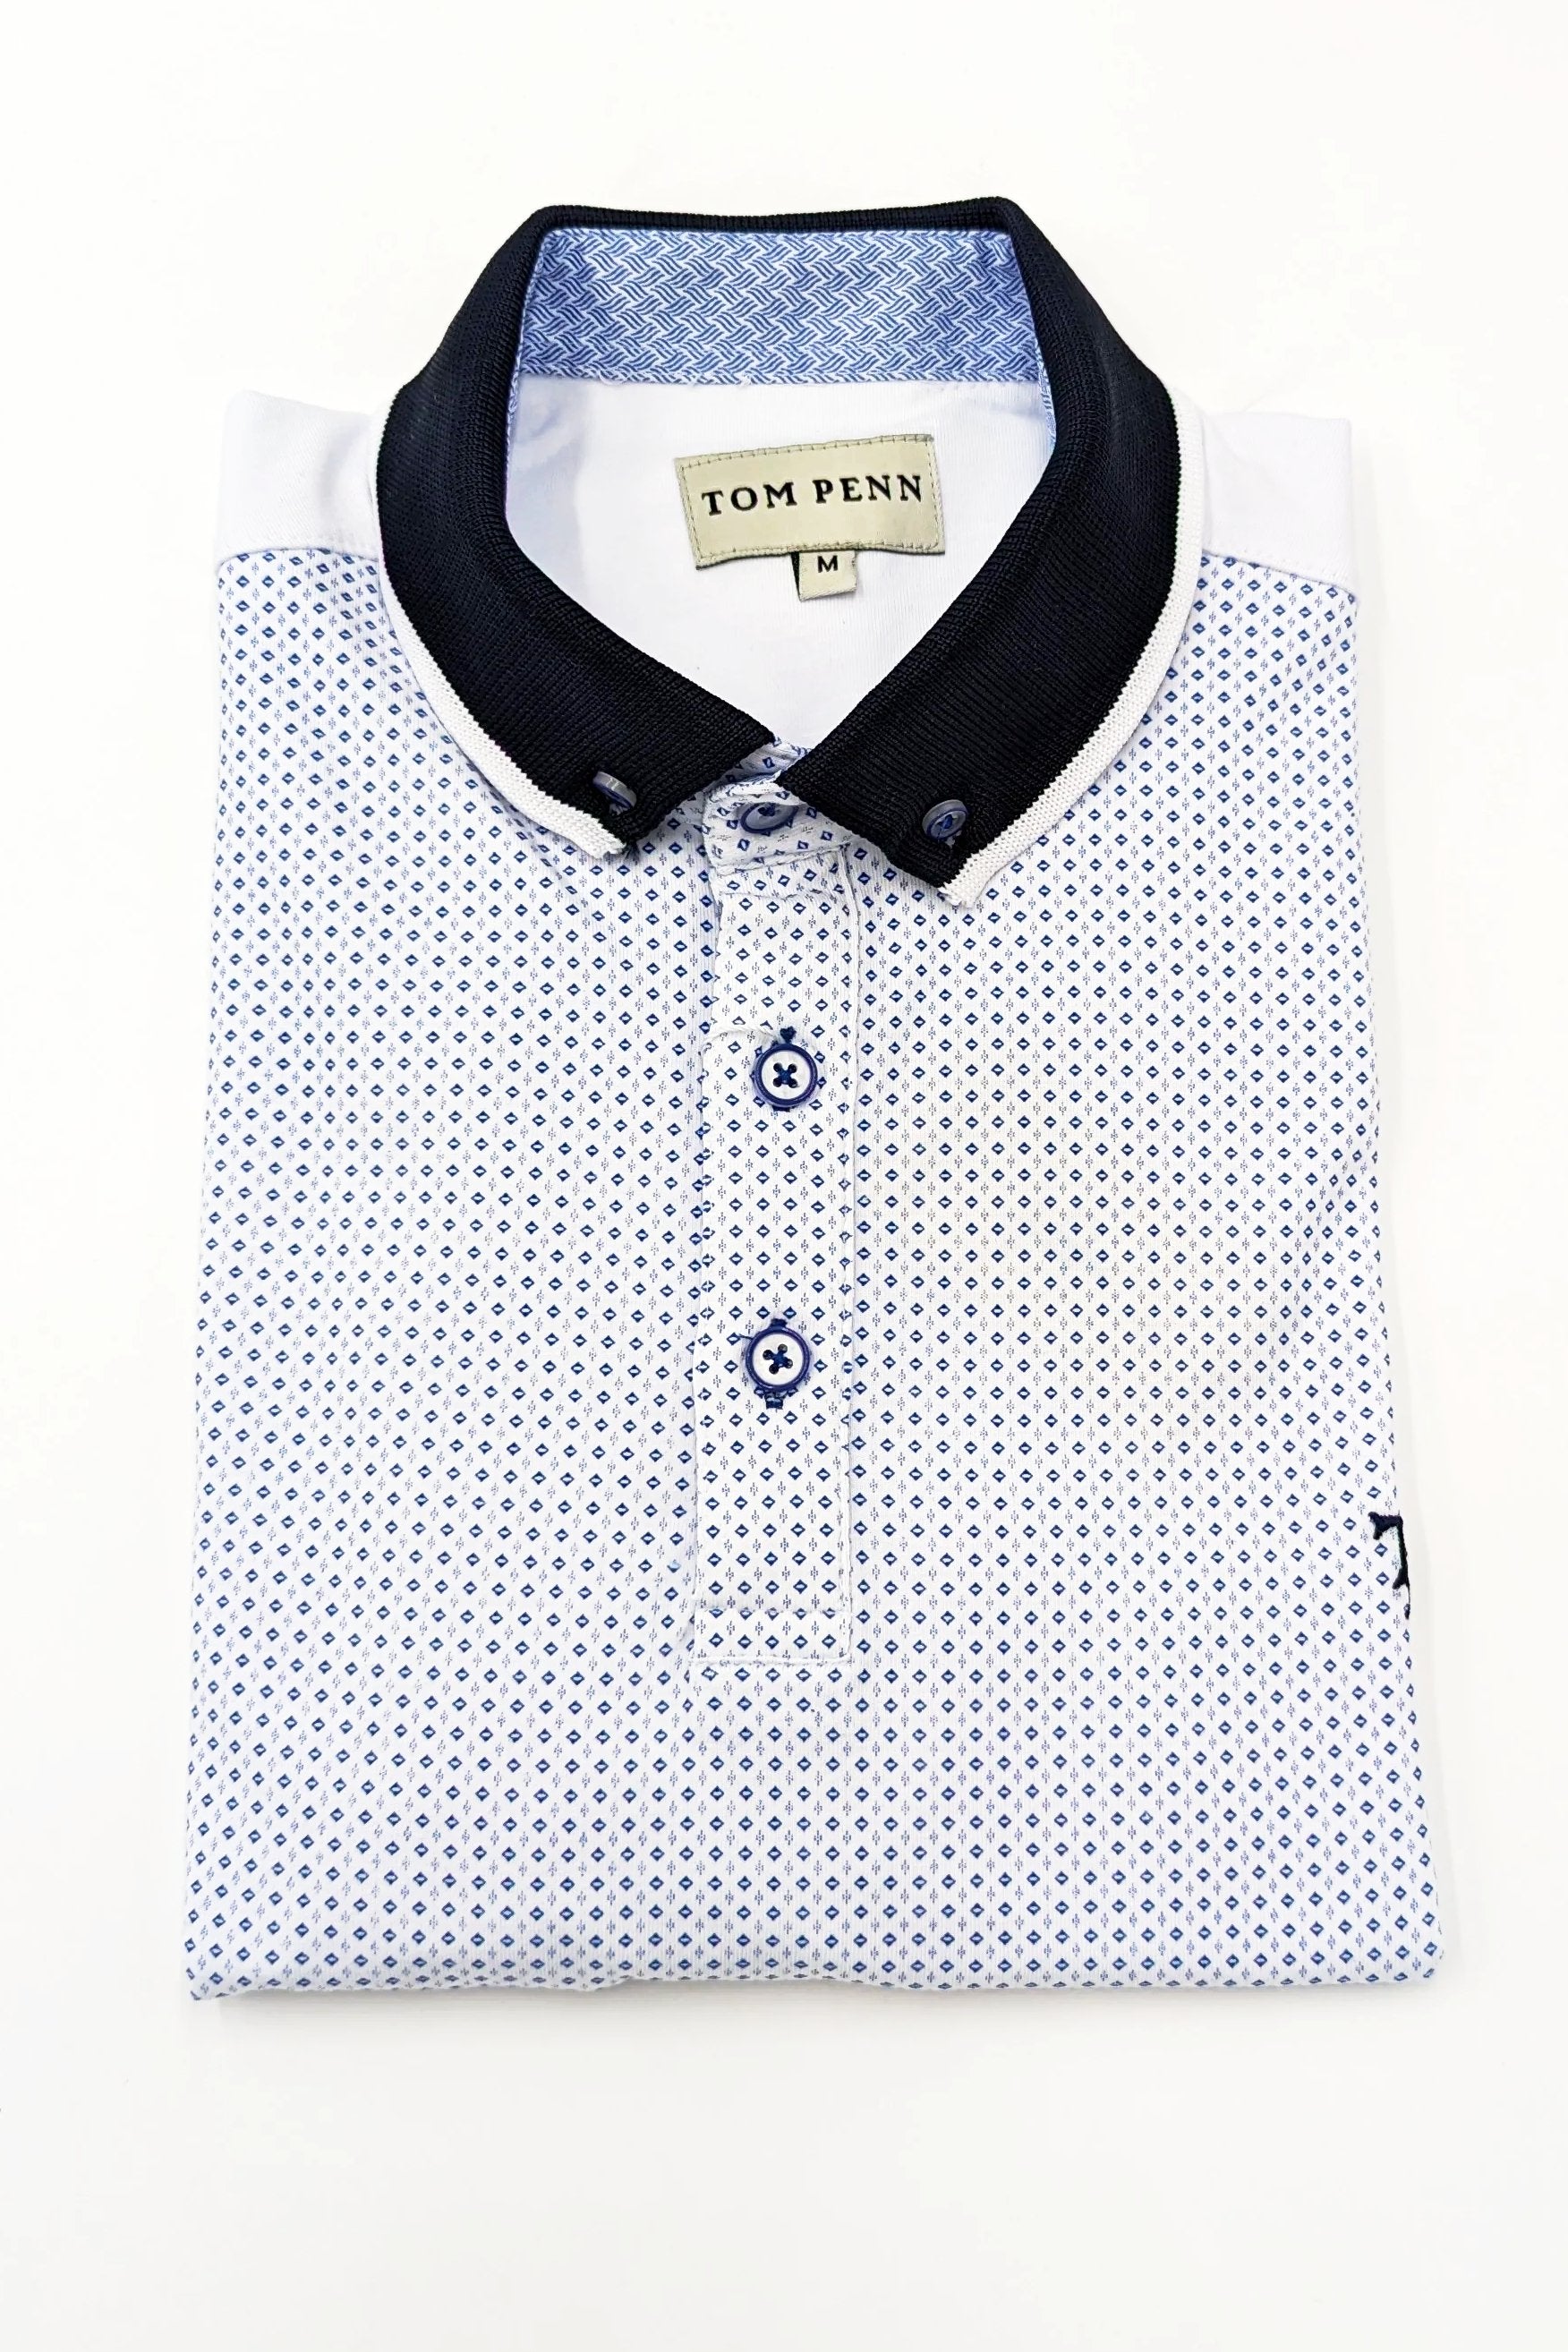 Tom Penn White/Blue Front Print Polo Shirt